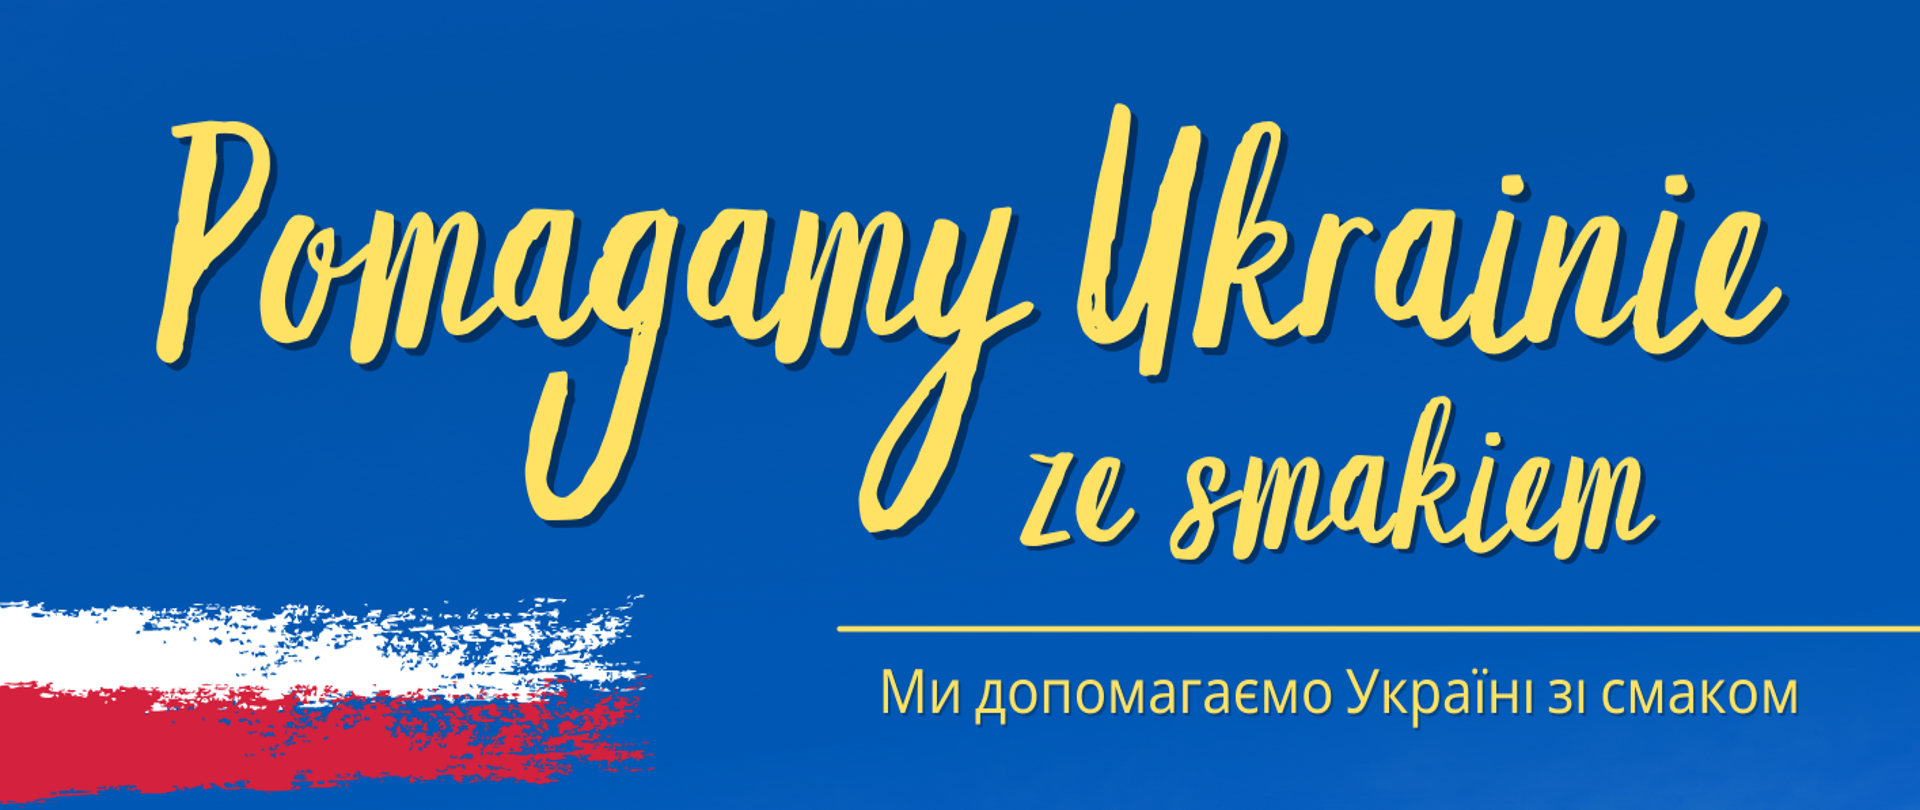 Pomagamy Plakat Ukrainie